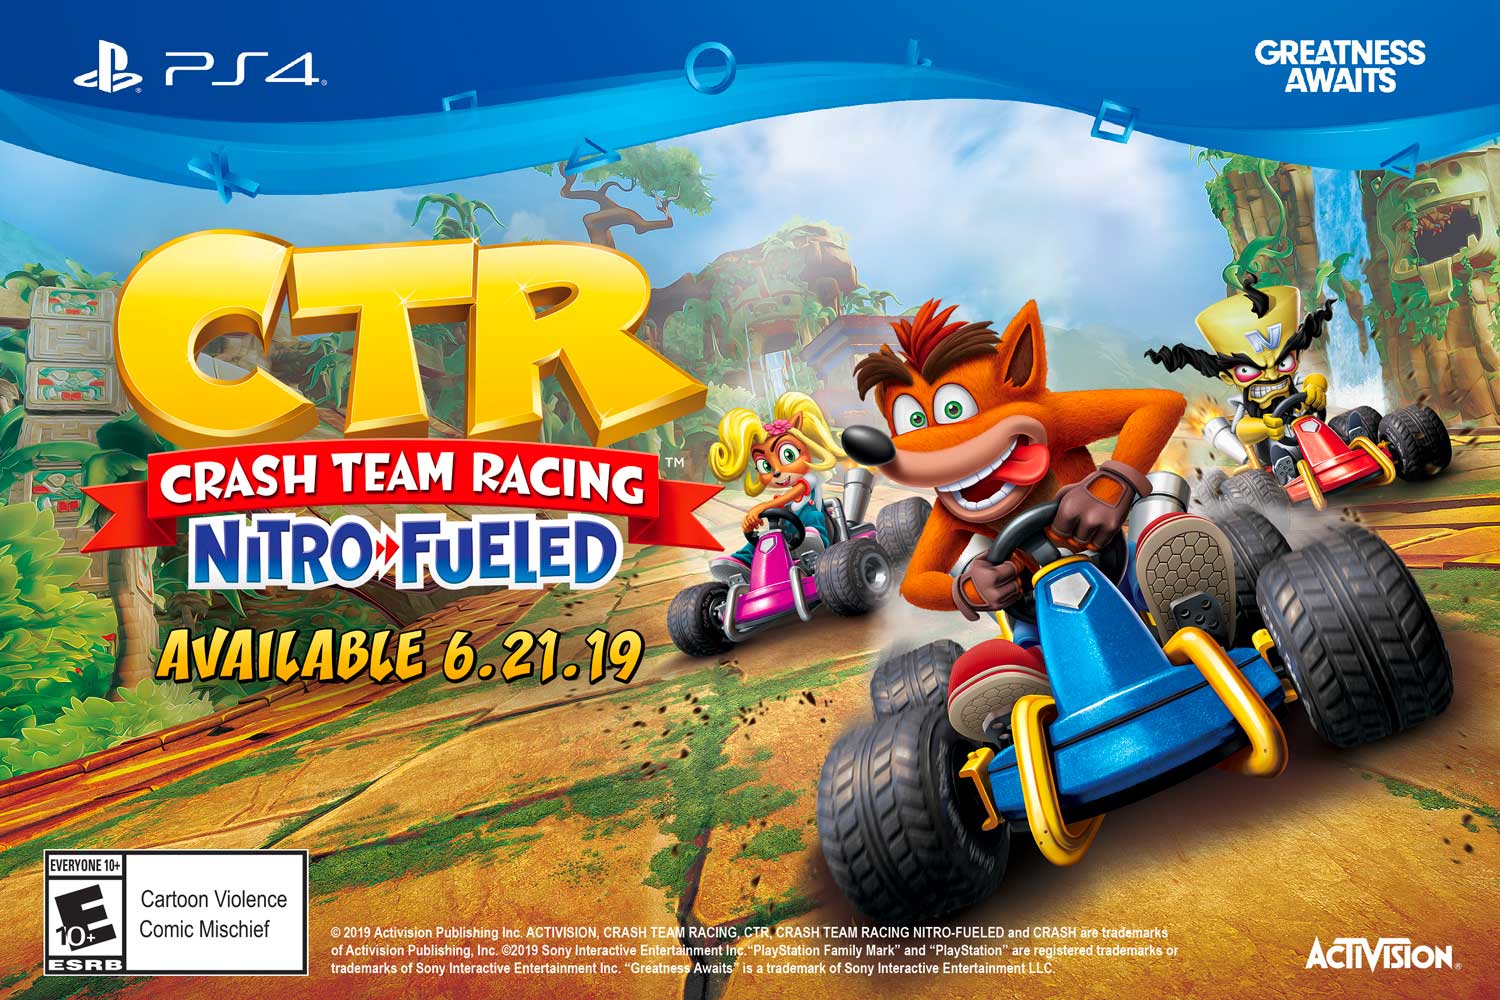 Crash team racing